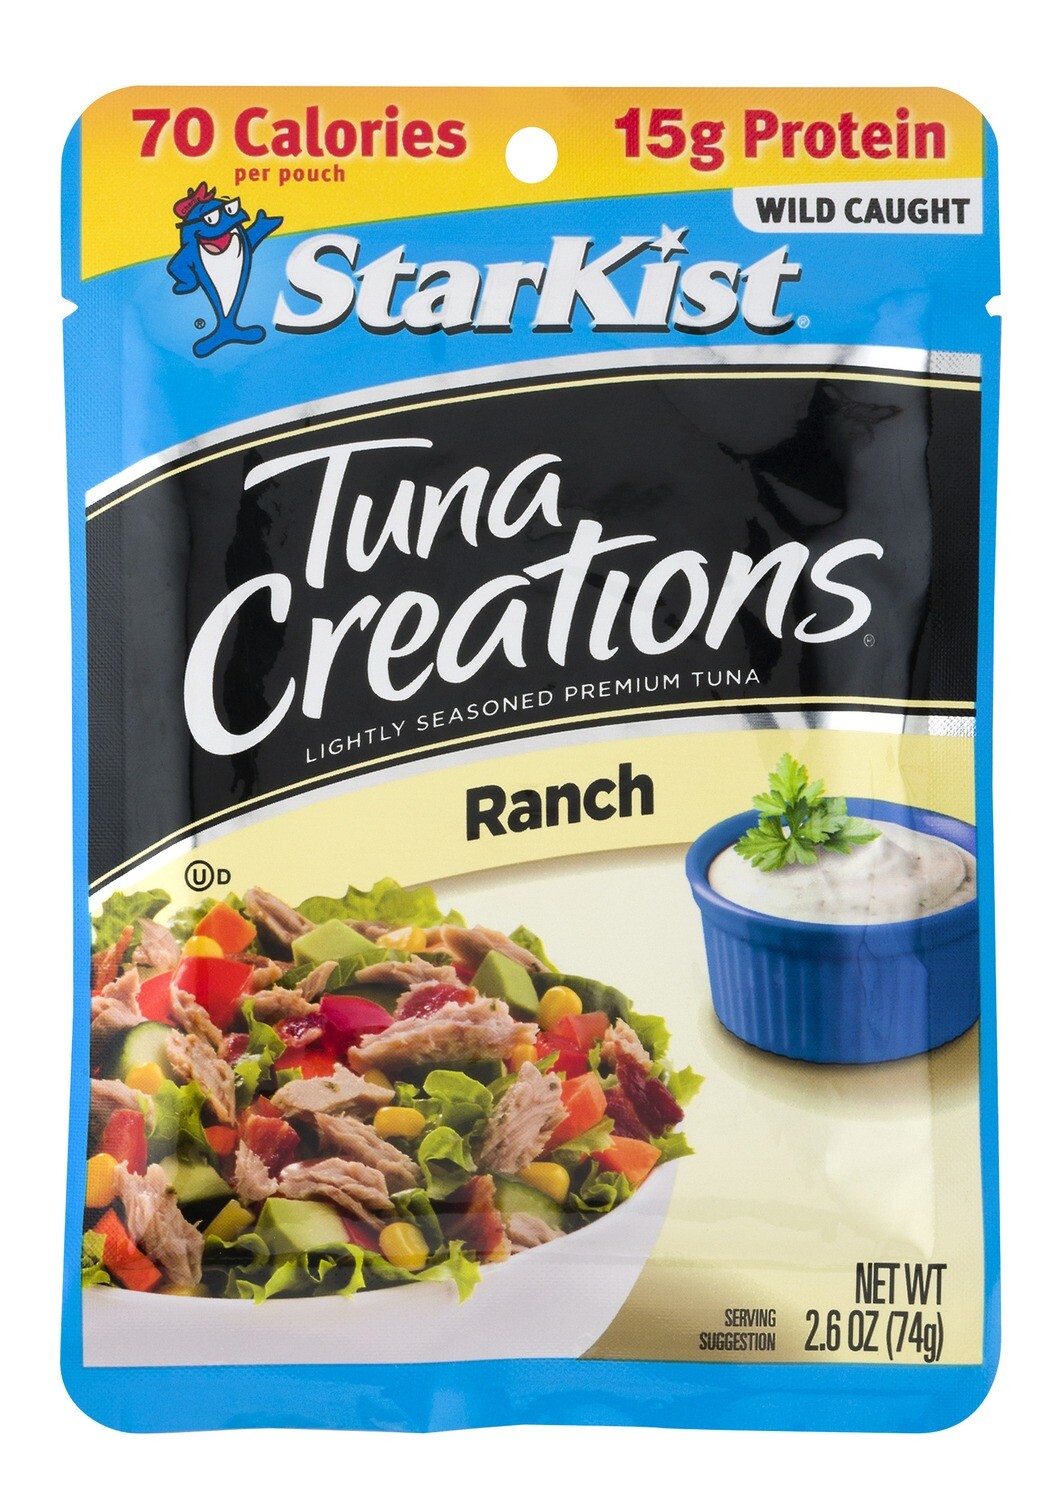 Starkist Tuna Creations     Ranch